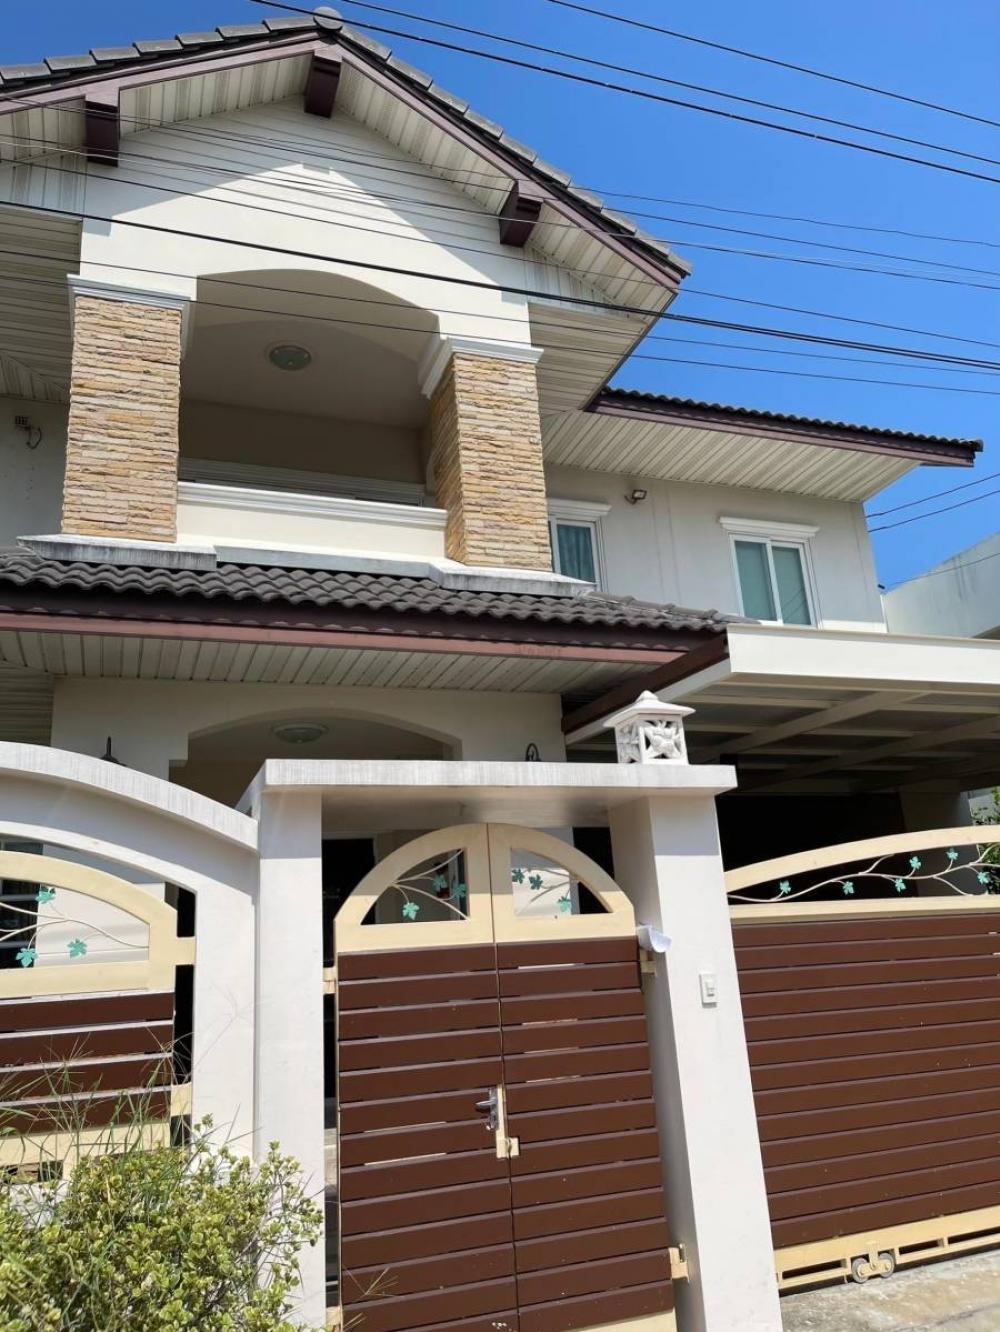 For SaleHouseBang kae, Phetkasem : Urgently selling a 2-story detached house, self-built house, prime location. Phutthamonthon Sai 2 area